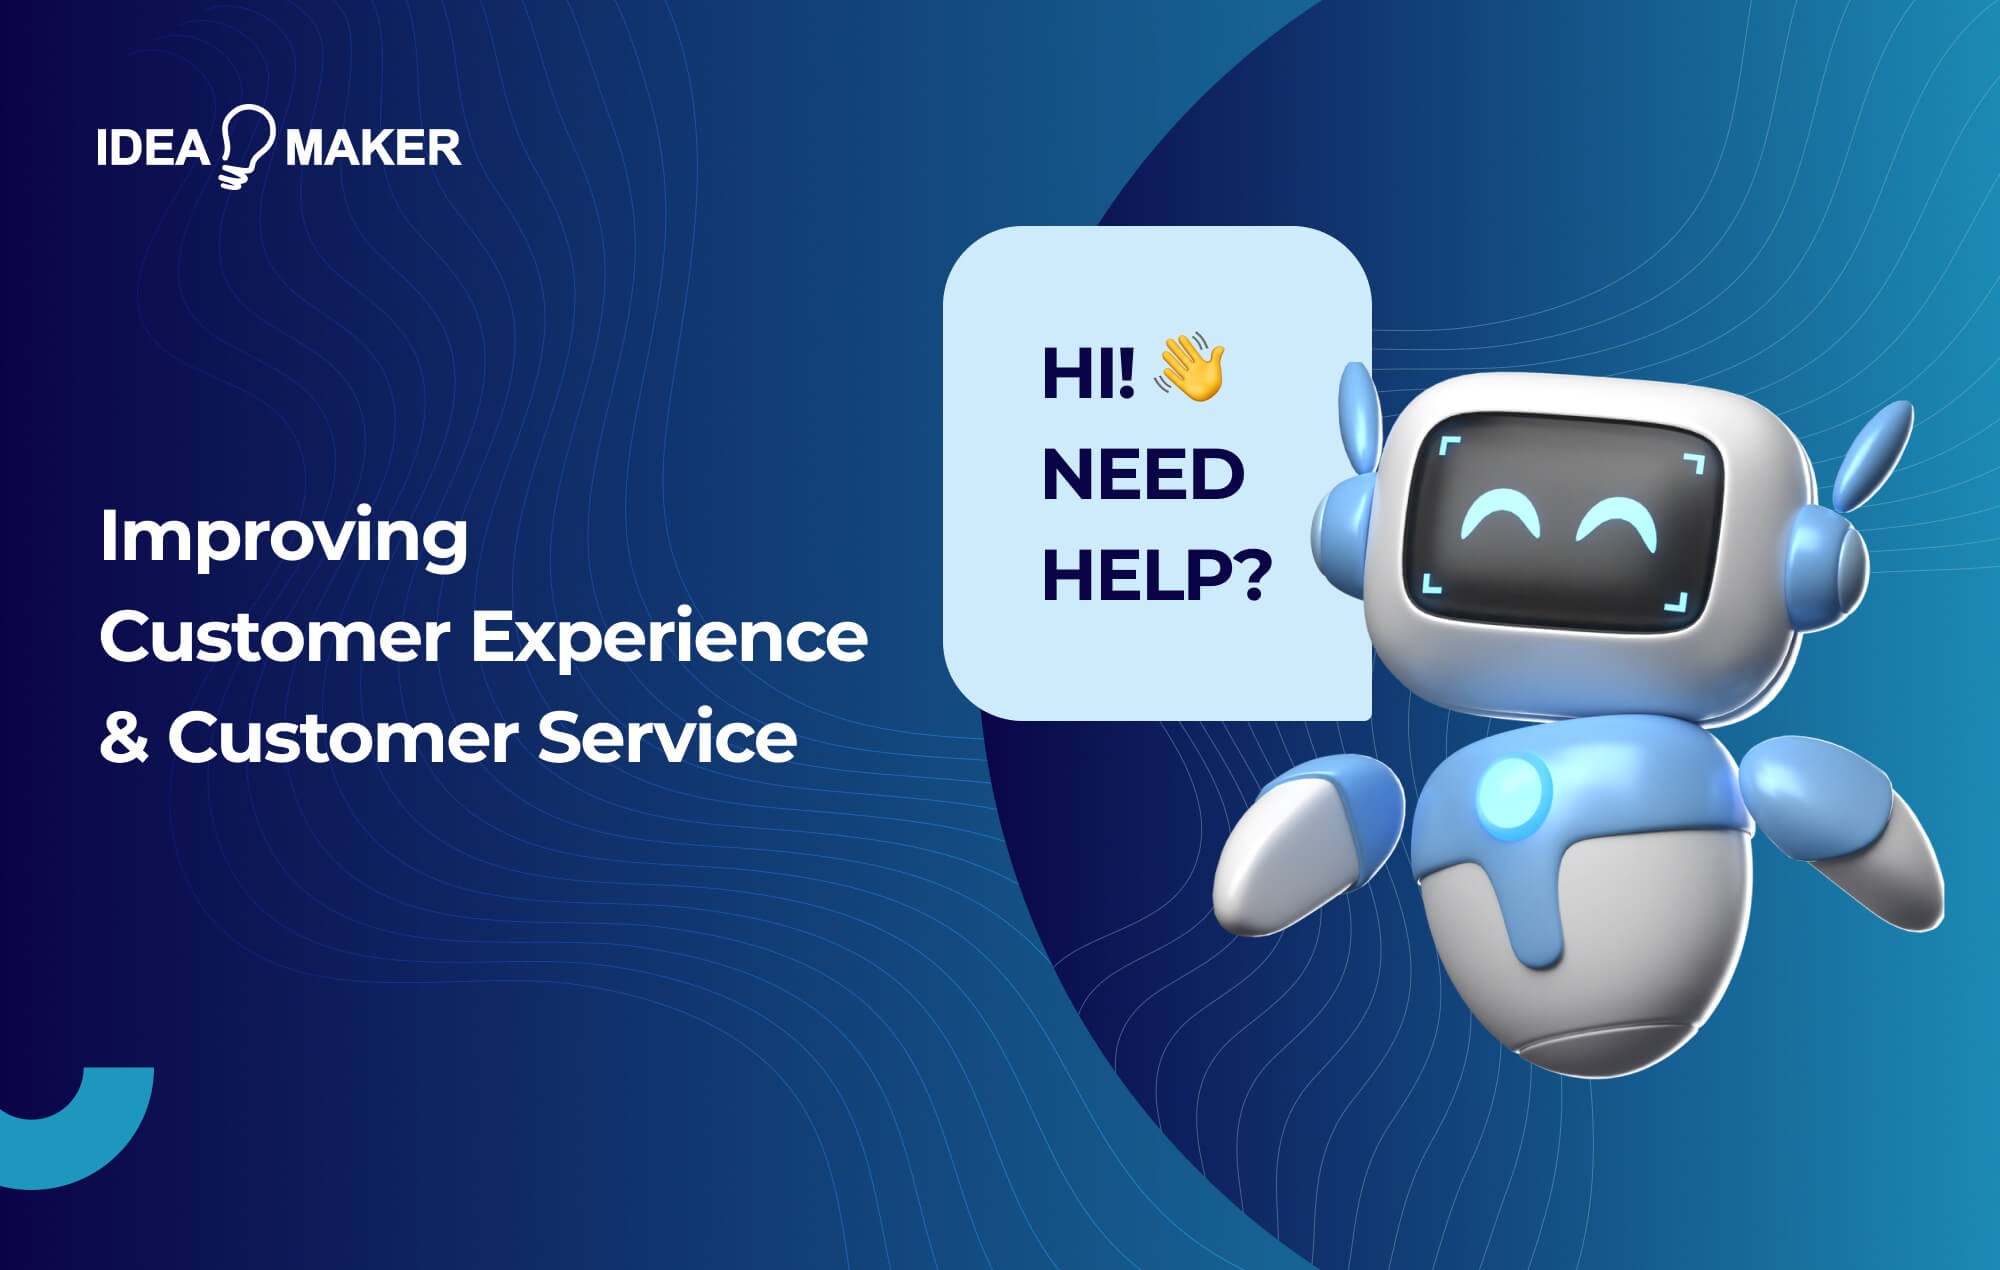 Ideamaker - Improving Customer Experience & Customer Service